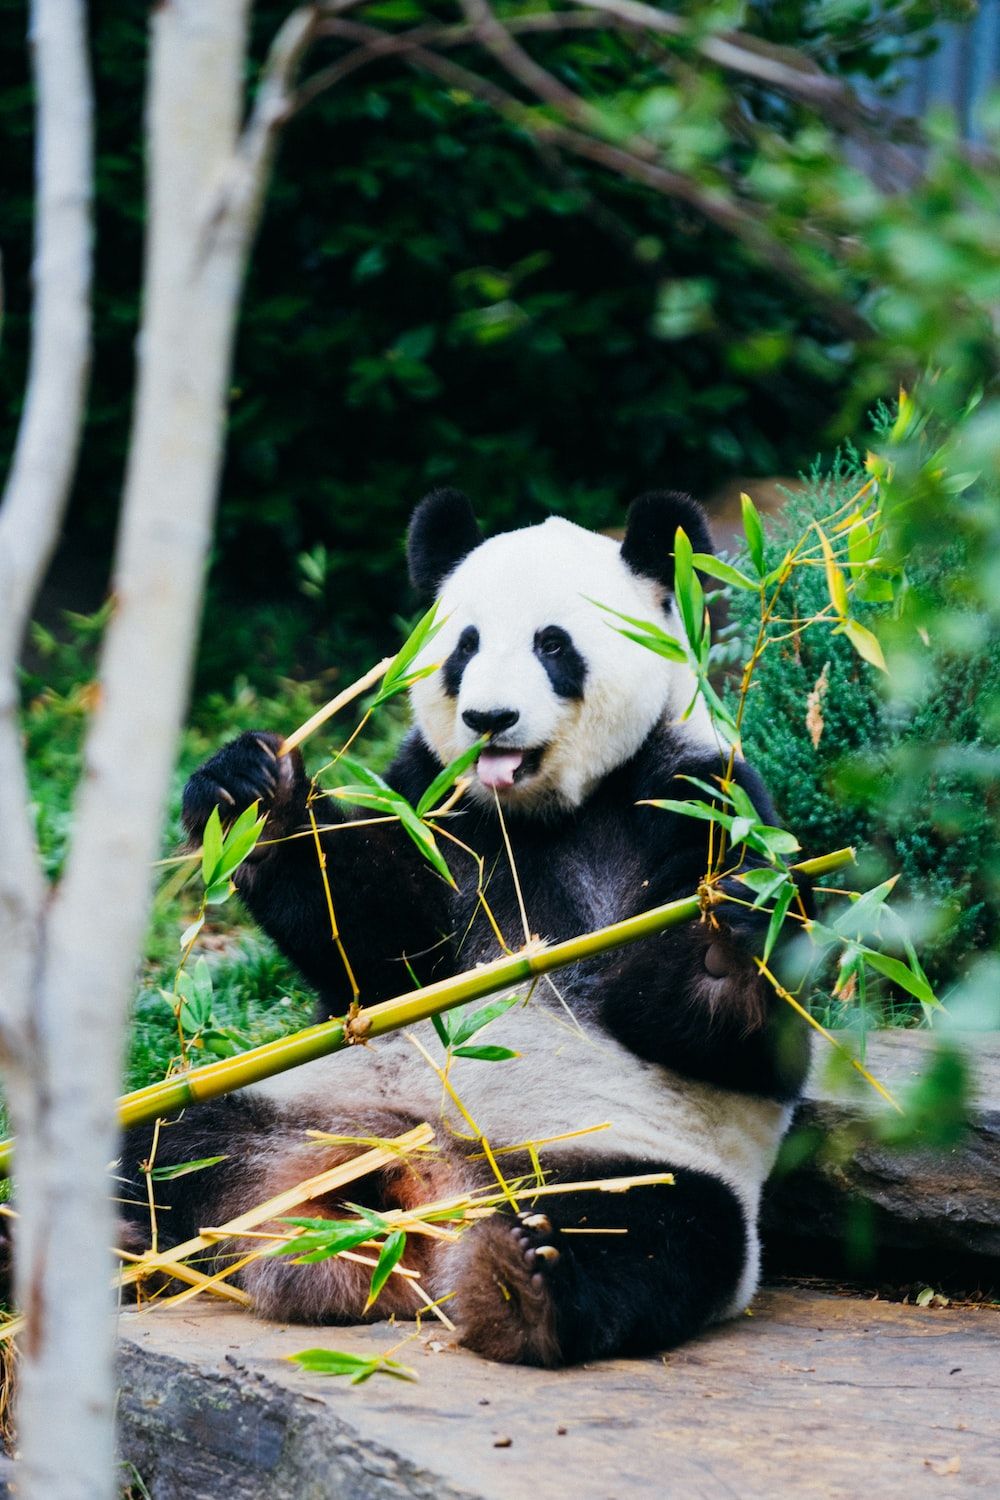 A panda bear sitting on the ground eating bamboo - Panda